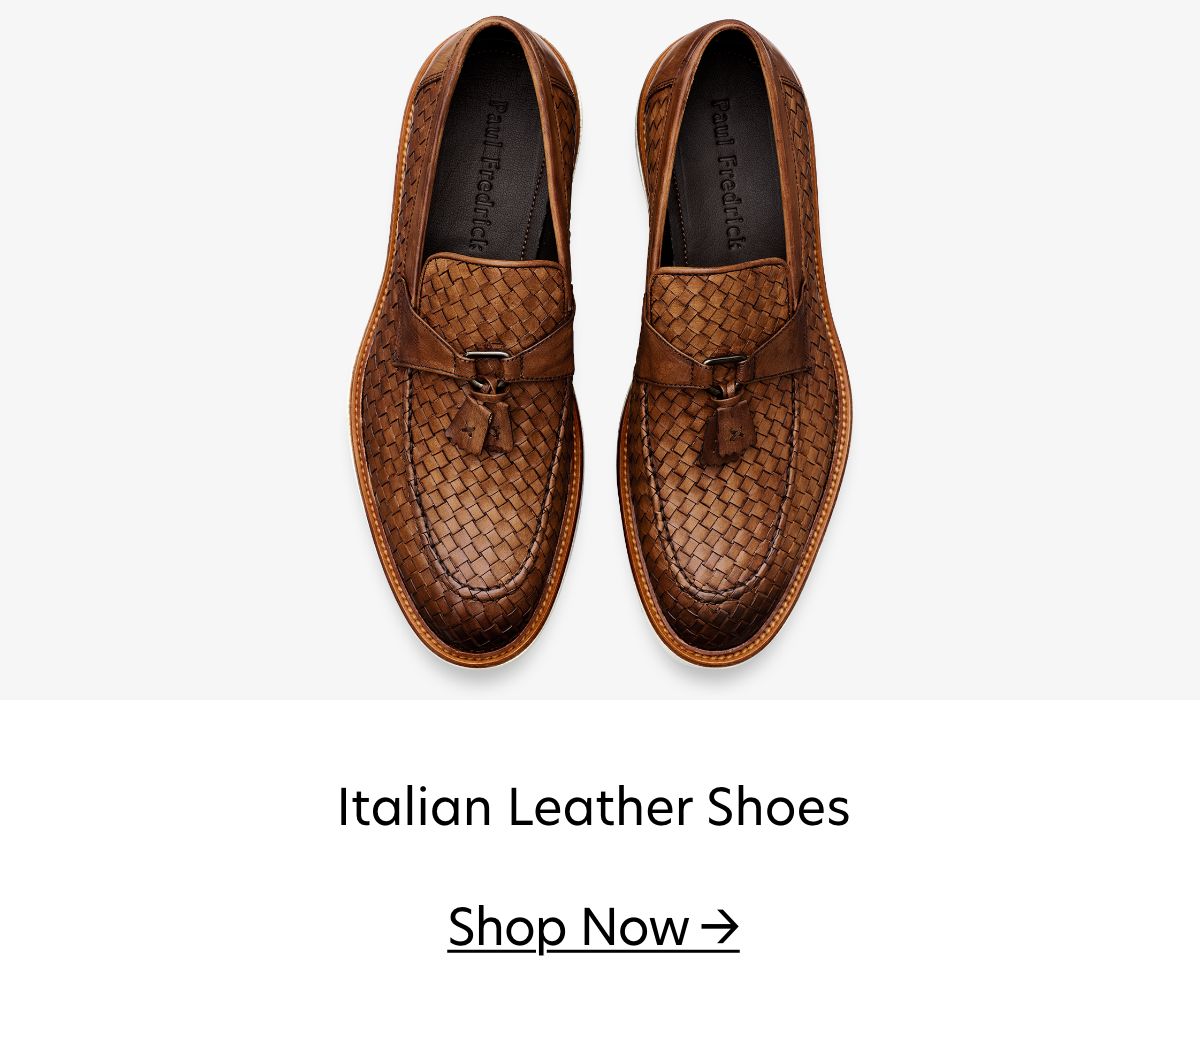  Italion Leather Shoes Shop Now 